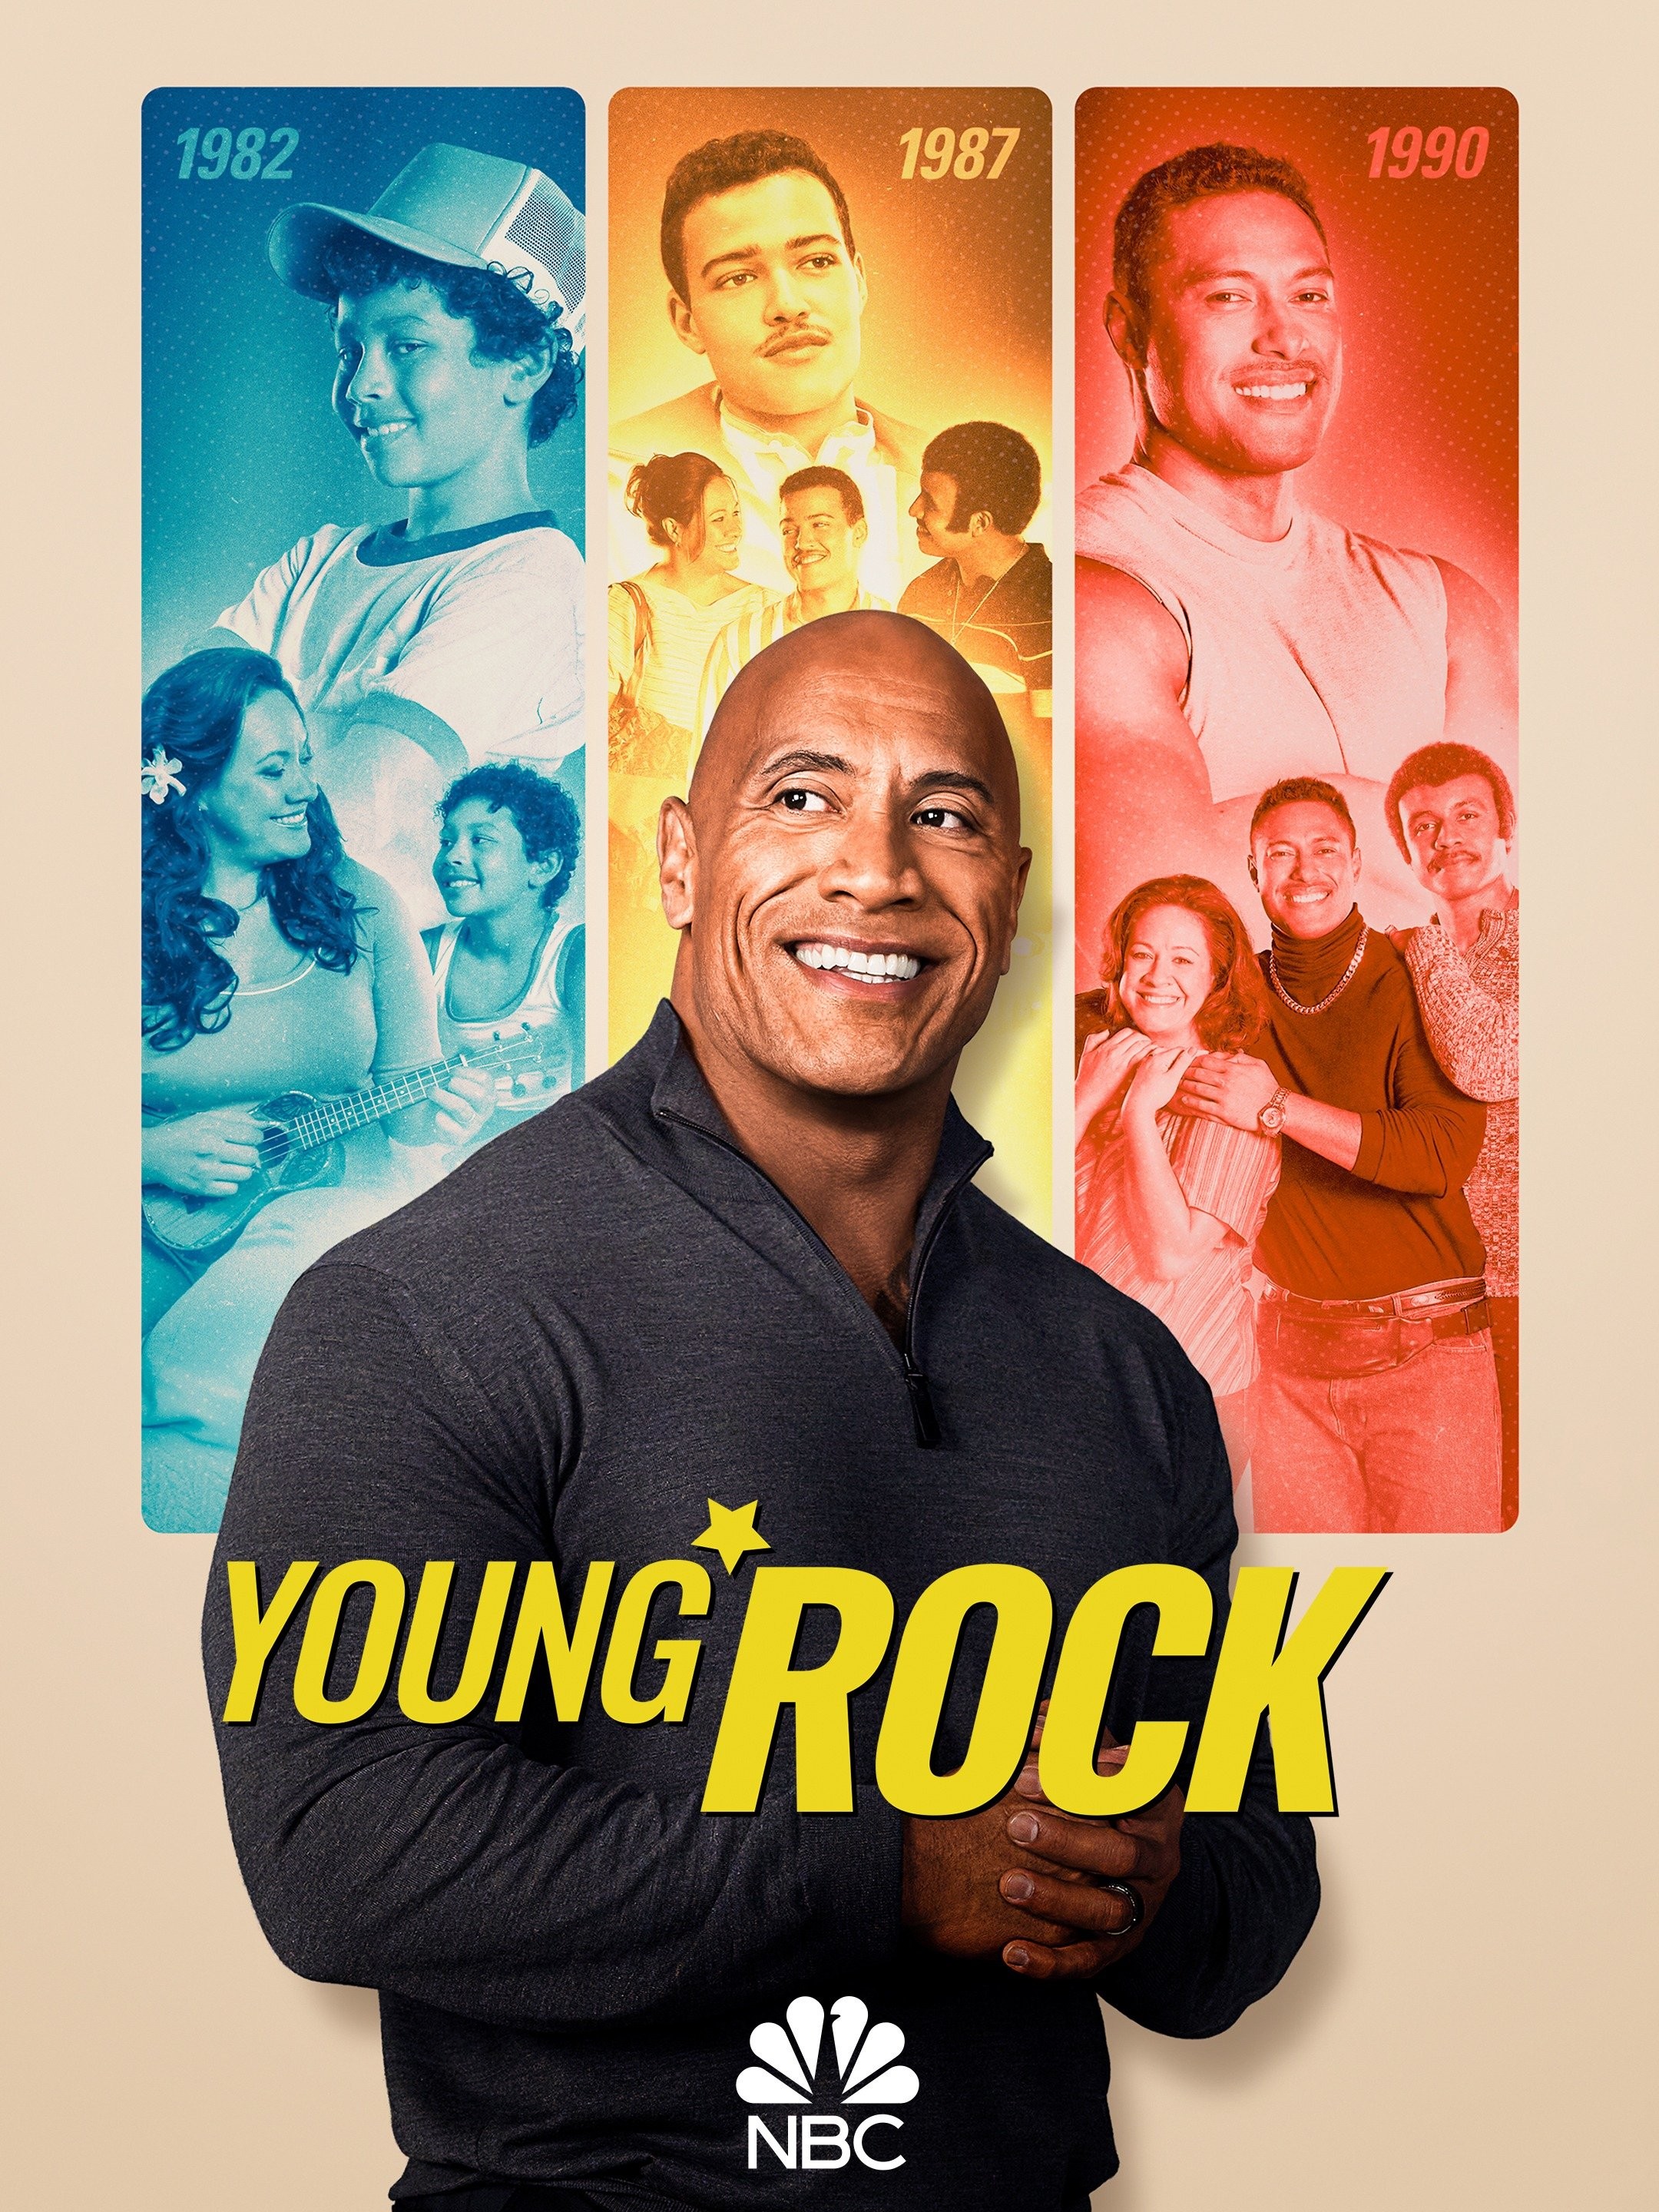 Young Rock': Review of Dwayne Johnson NBC Sitcom